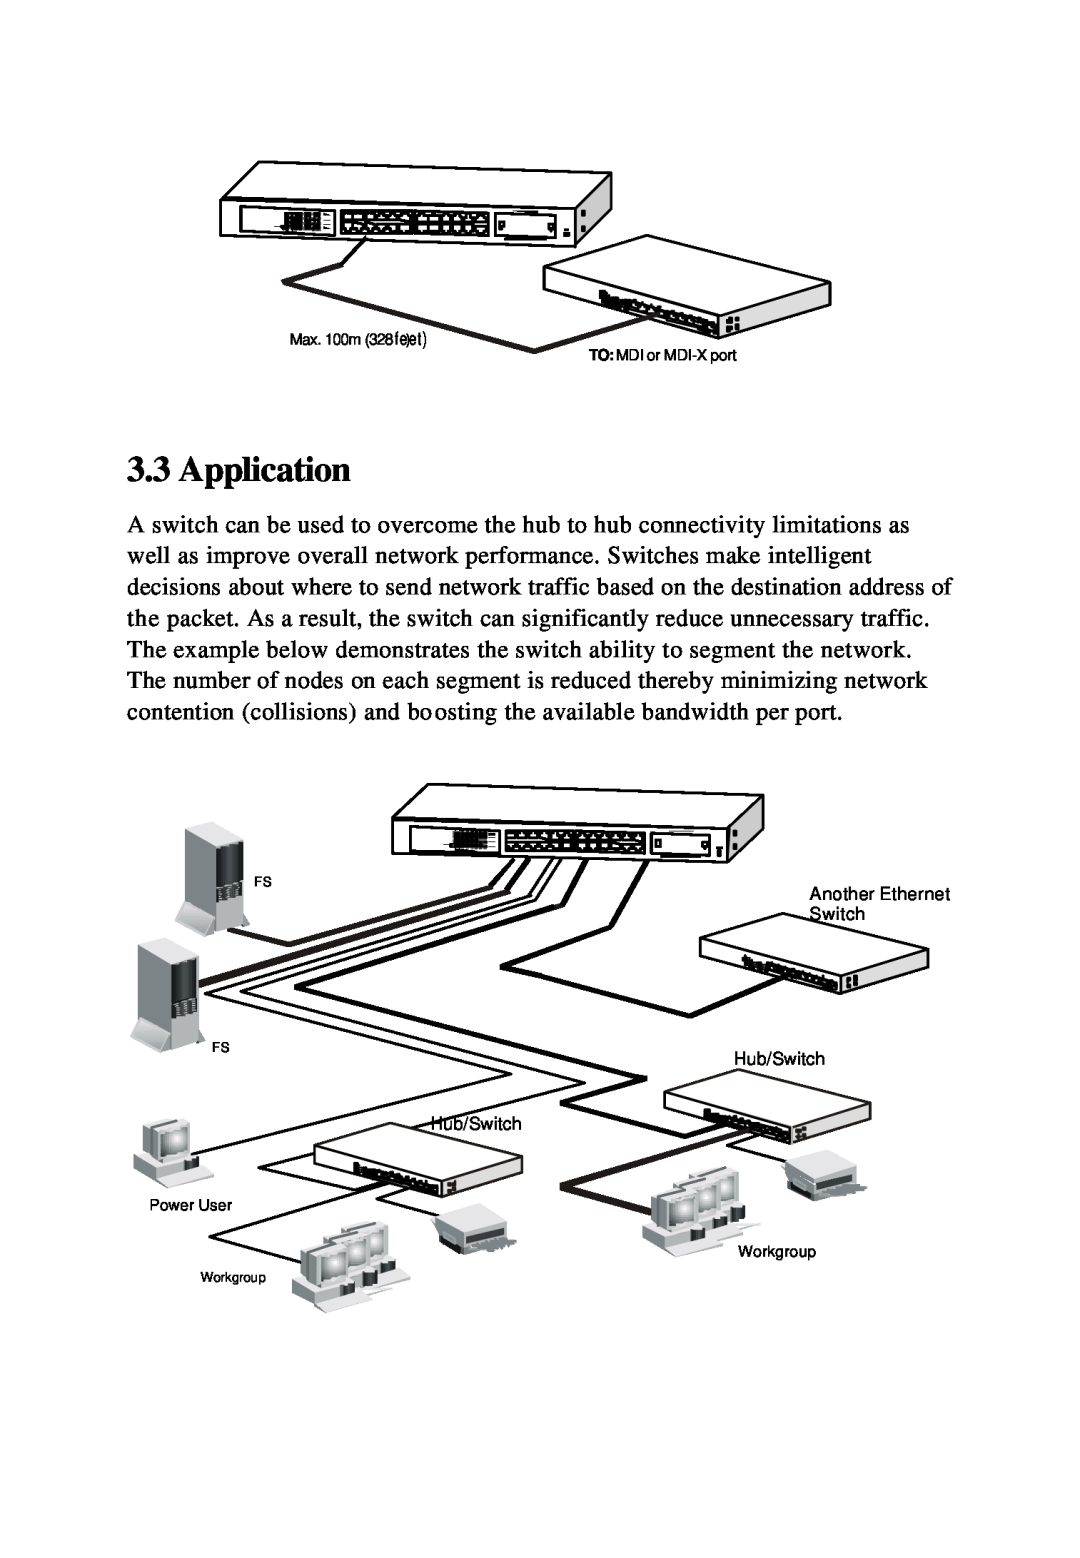 KTI Networks KS-324F manual Application, Another Ethernet Switch Hub/Switch Hub/Switch 